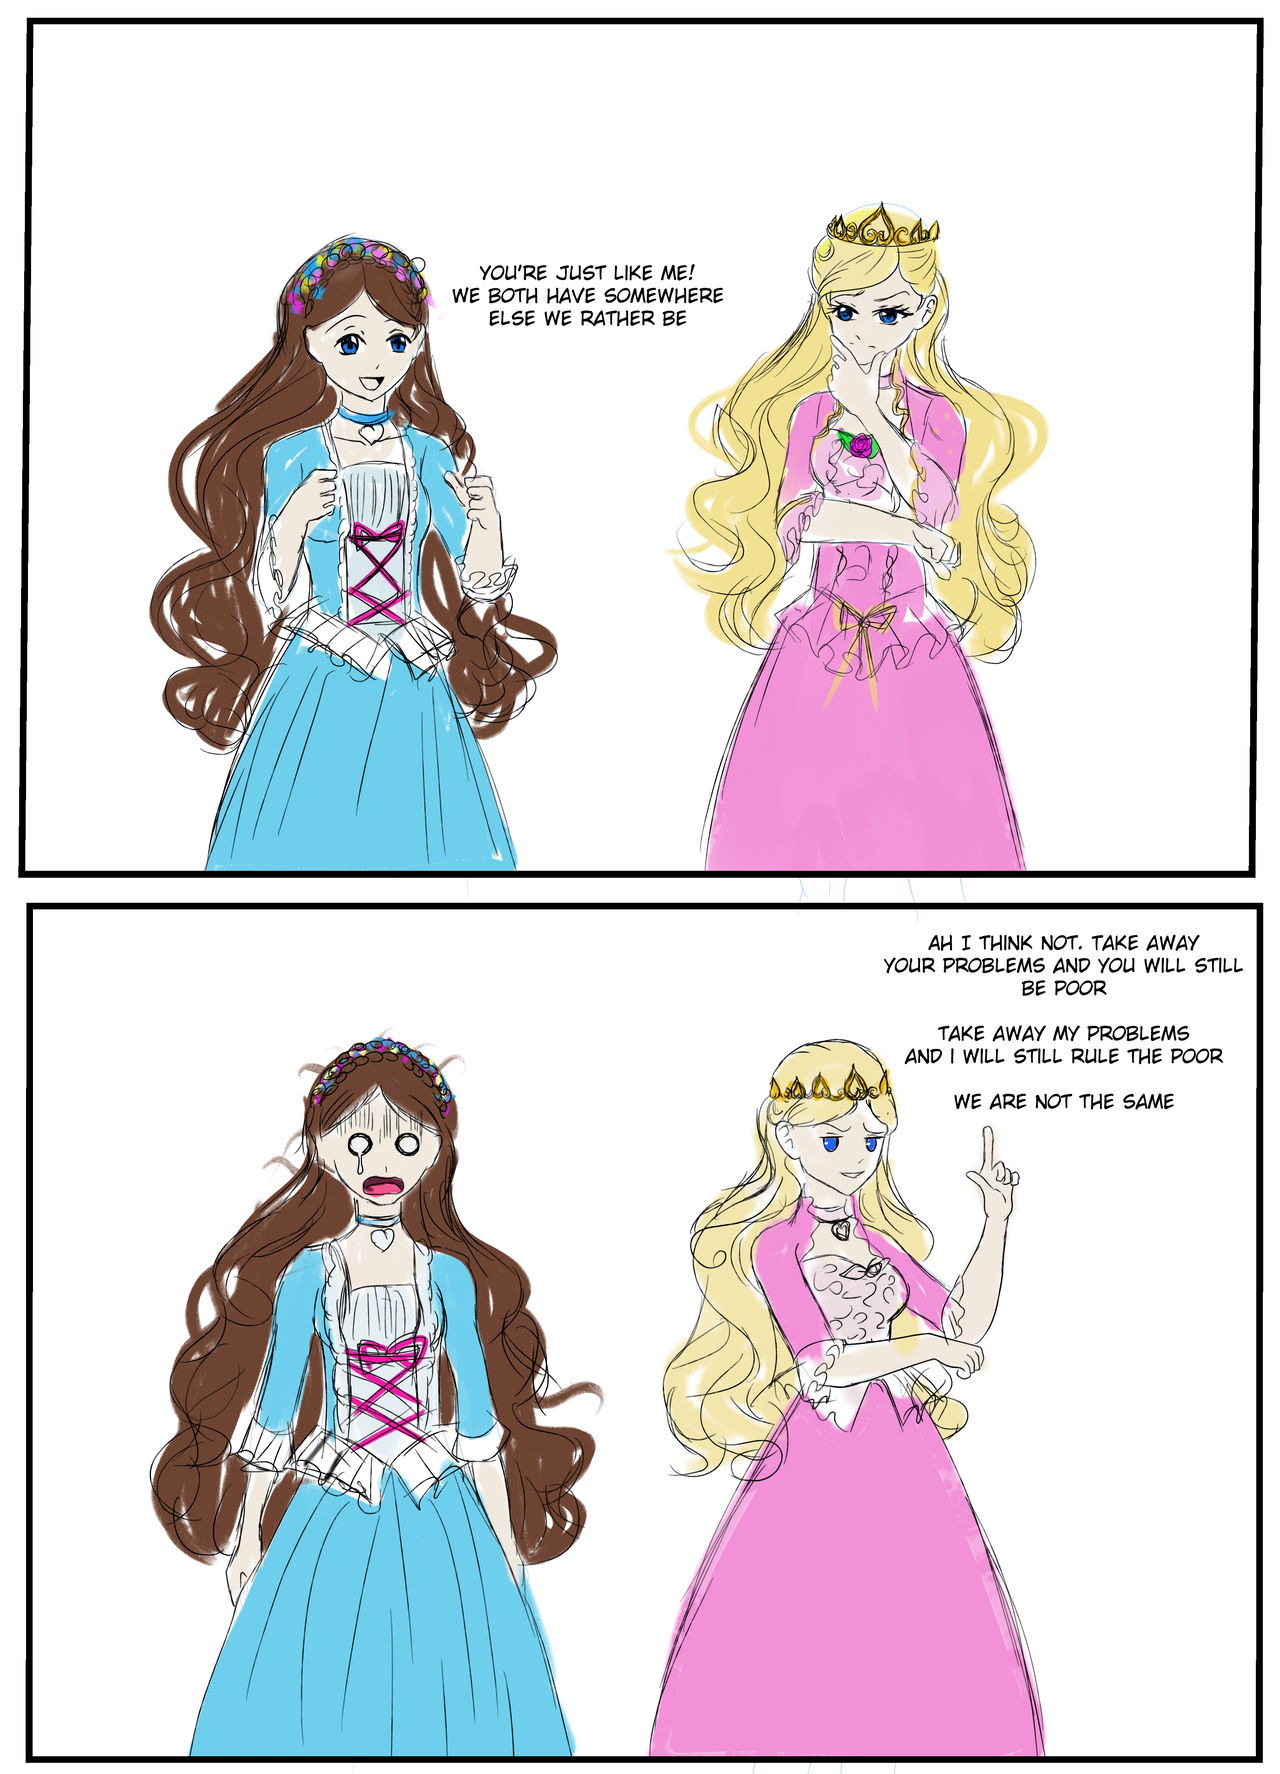 Princess and the Poor [Joke meme] by MerisuTheArtSheep on DeviantArt